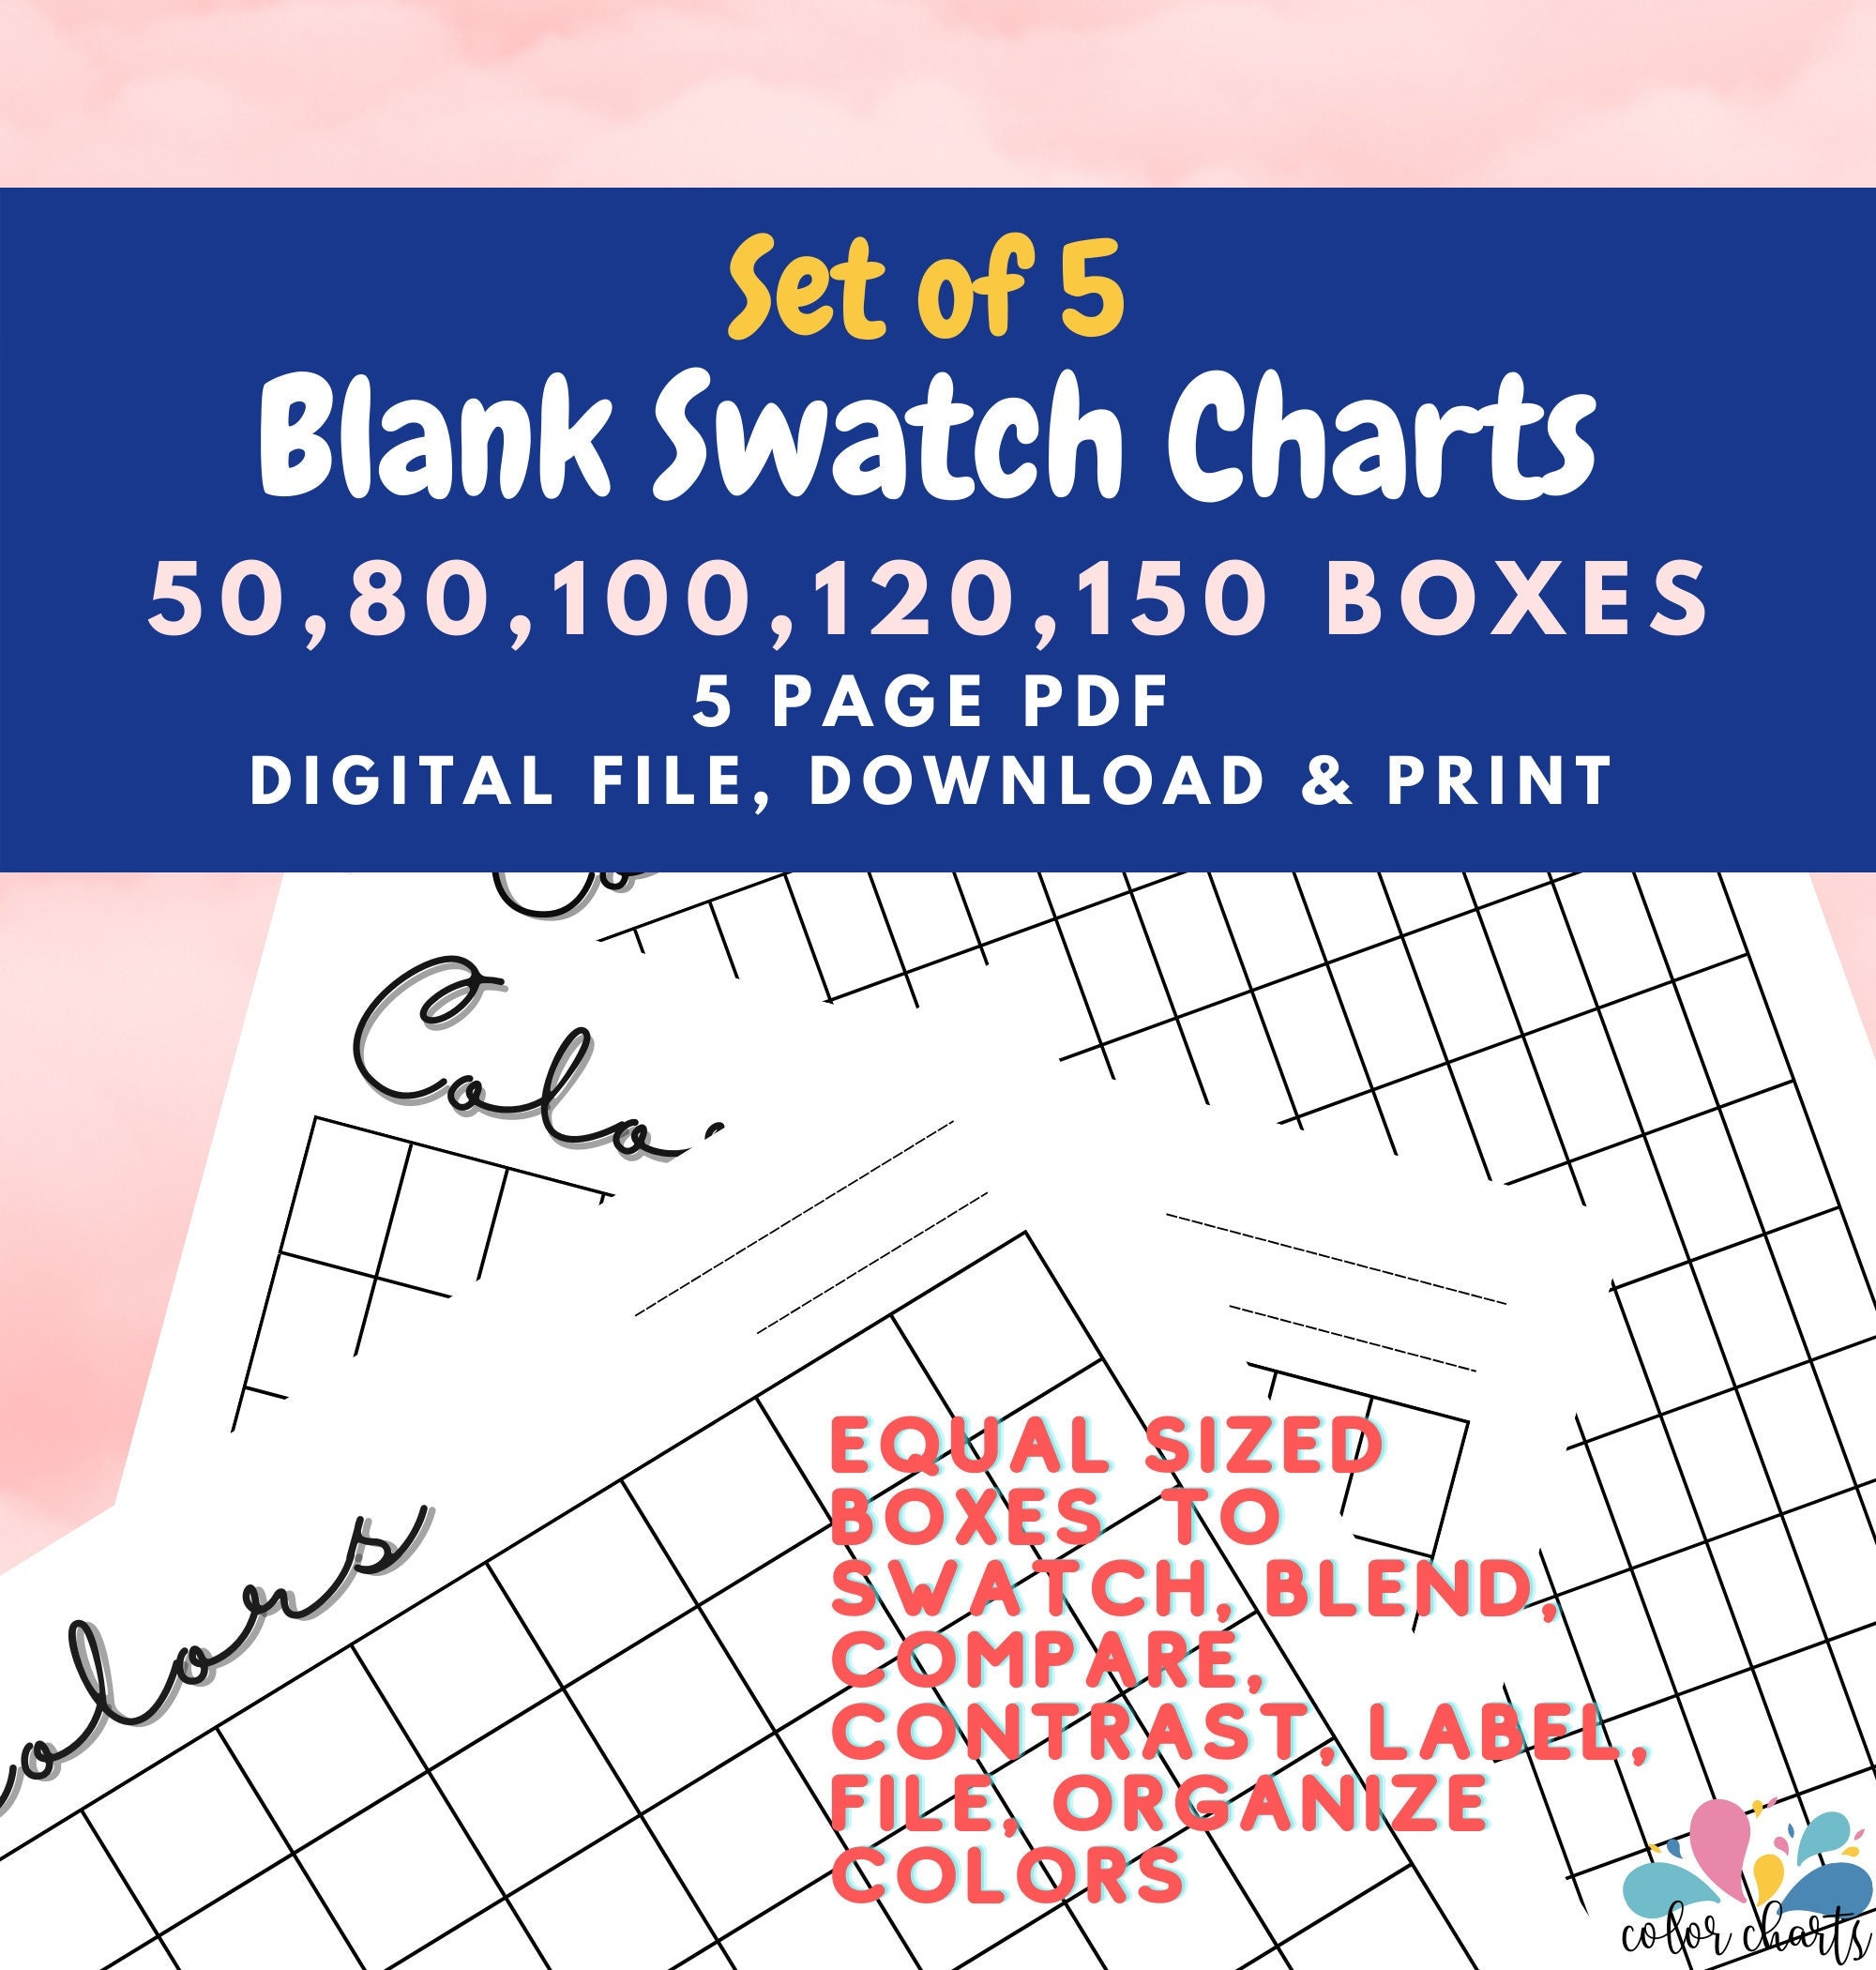 Soucolor 180 Chart | Pre-printed Color Codes| Swatch Boxes DIY | Digital  PDF| Single Page Printable | Floral Design